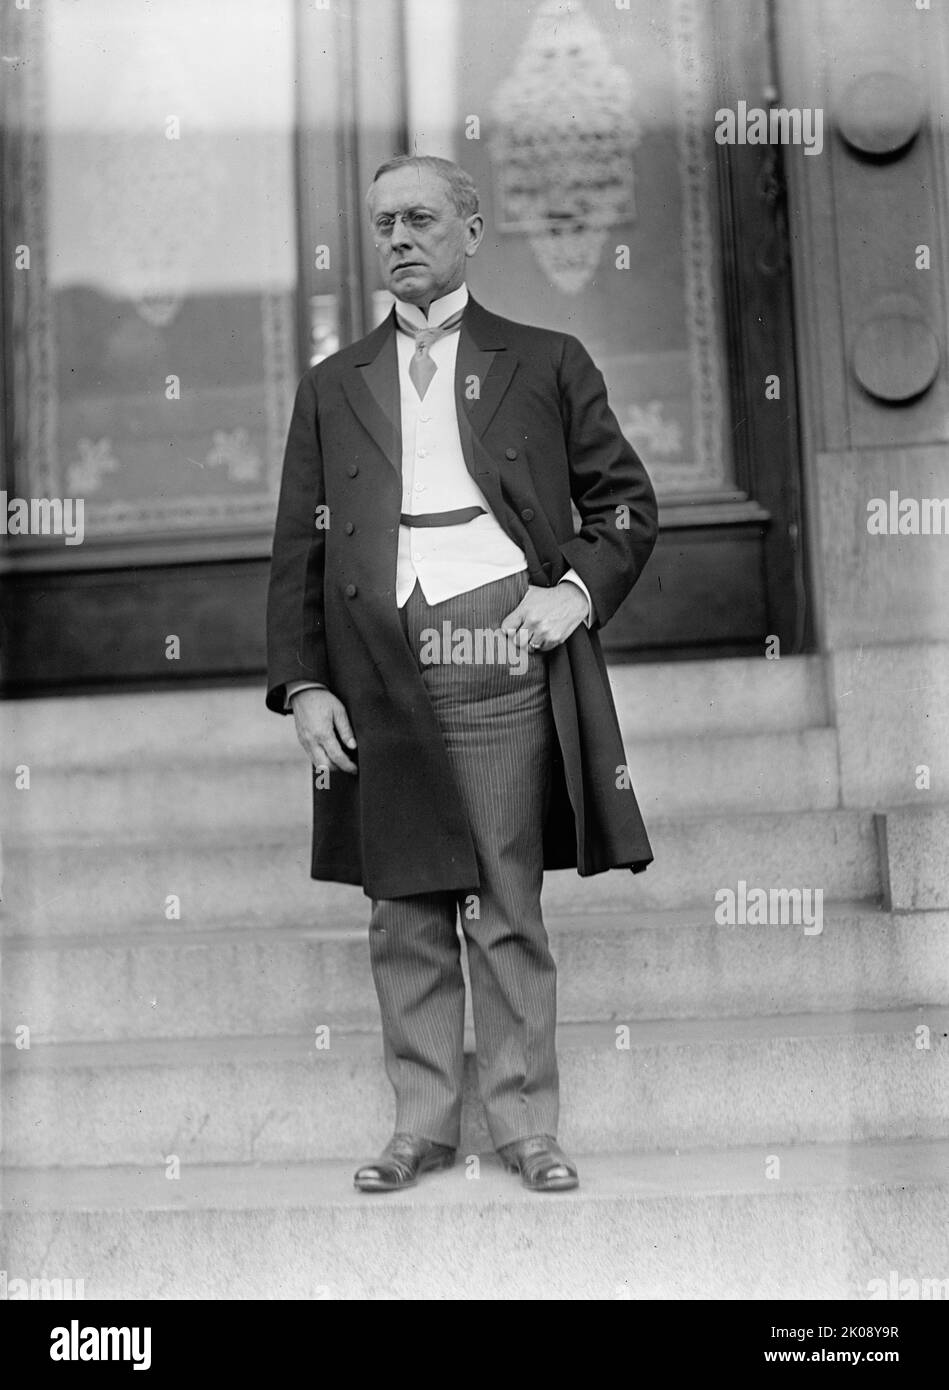 Governor, 1912. [US politicians]. Stock Photo